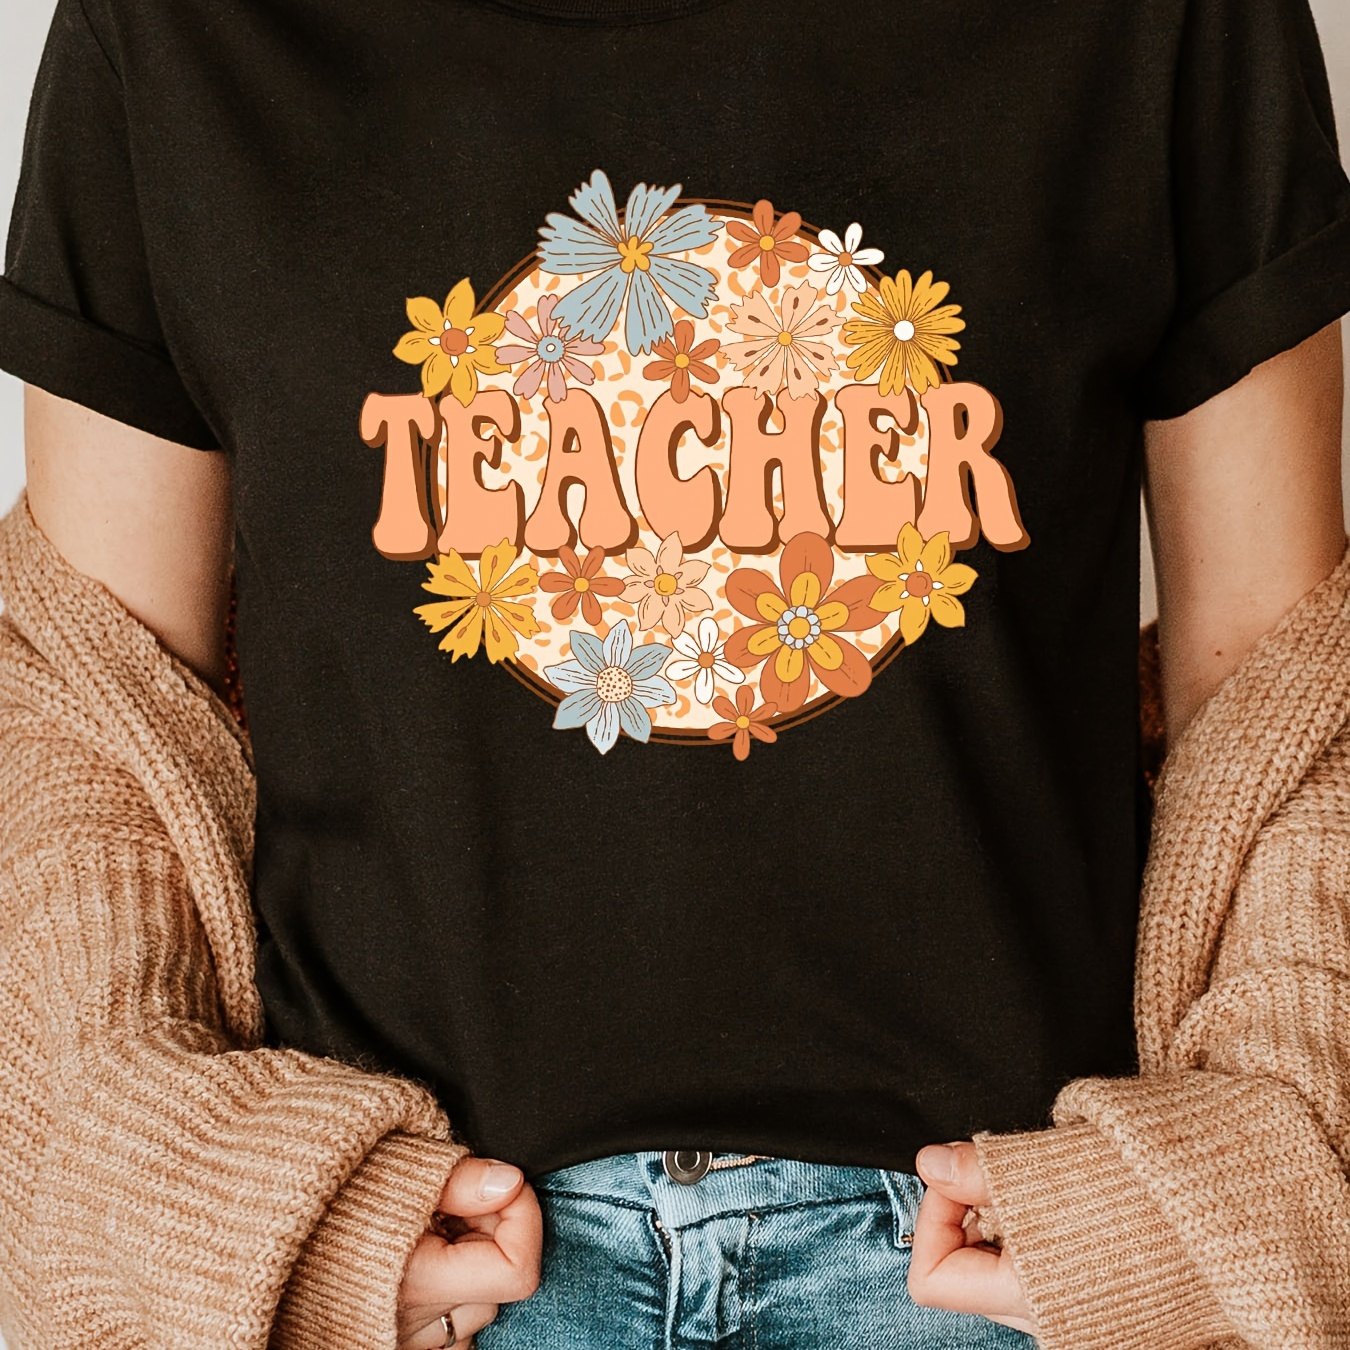 

Teacher Print Crew Neck T-shirt, Short Sleeve Casual Top For Summer & Spring, Women's Clothing